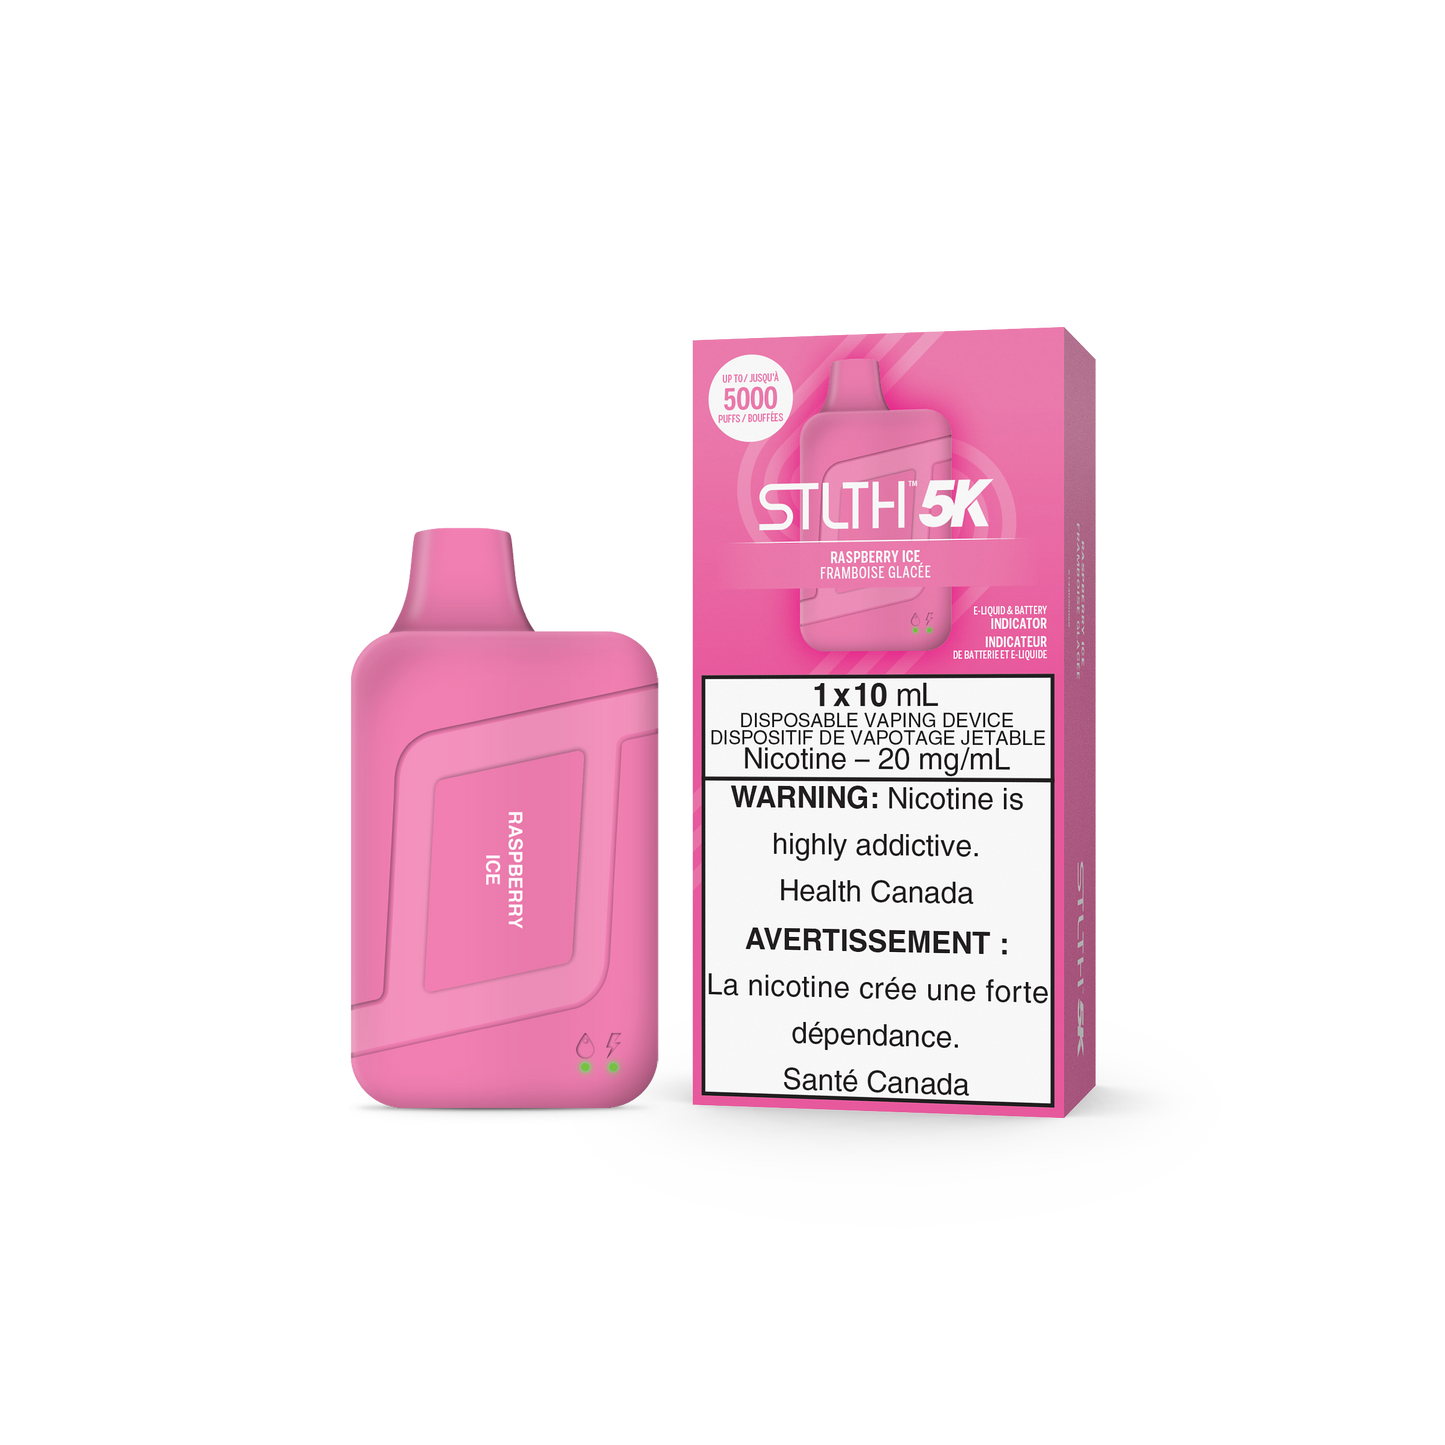 STLTH 5K - Raspberry Ice (Pack of 5)